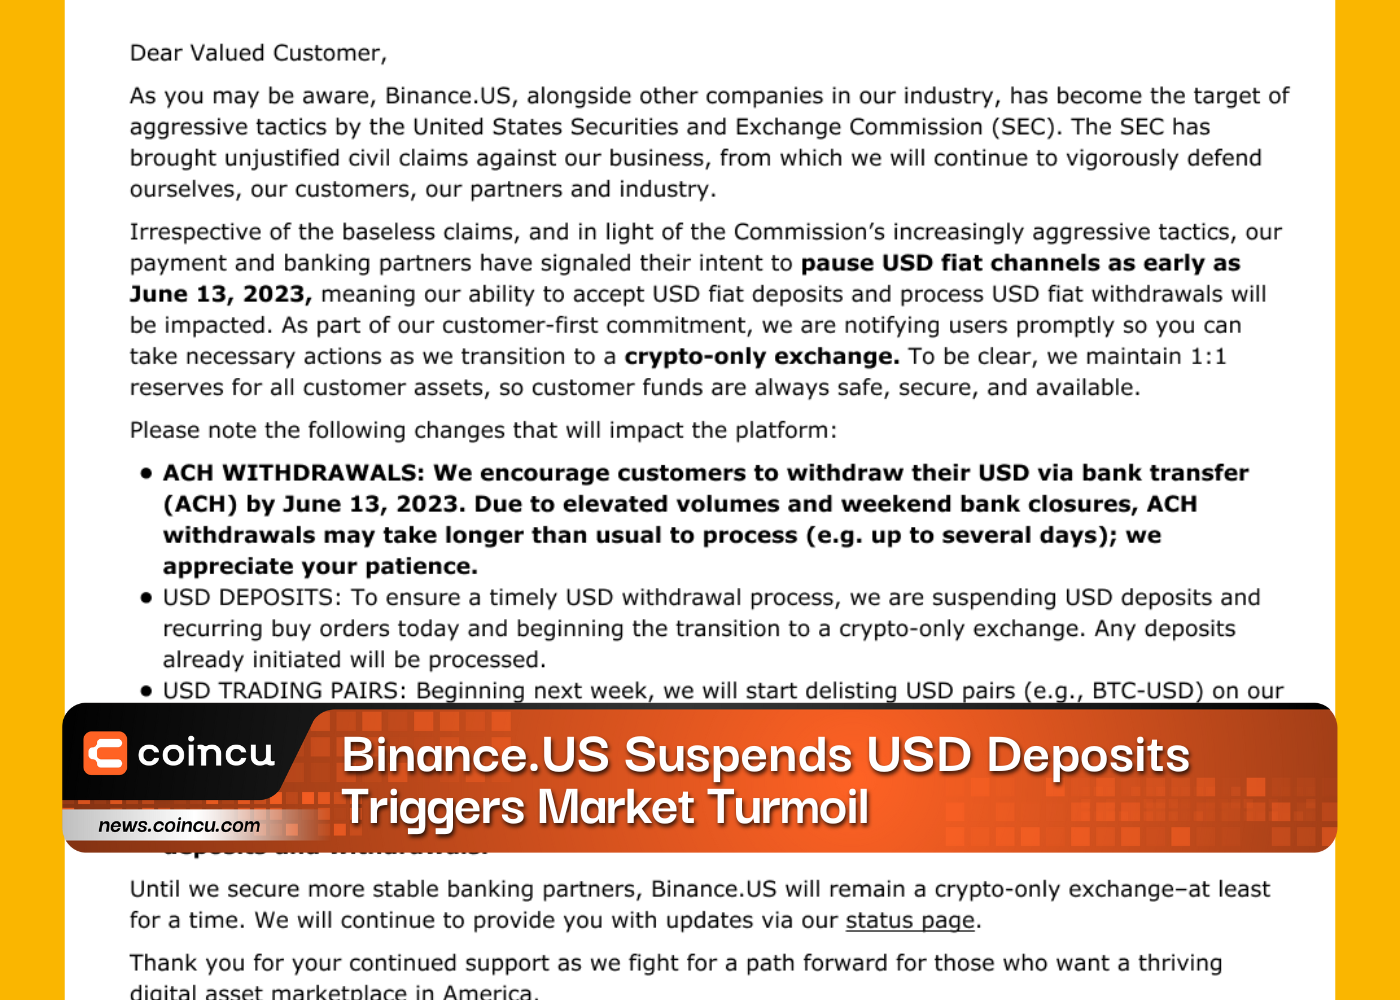 Binance.US Suspends USD Deposits